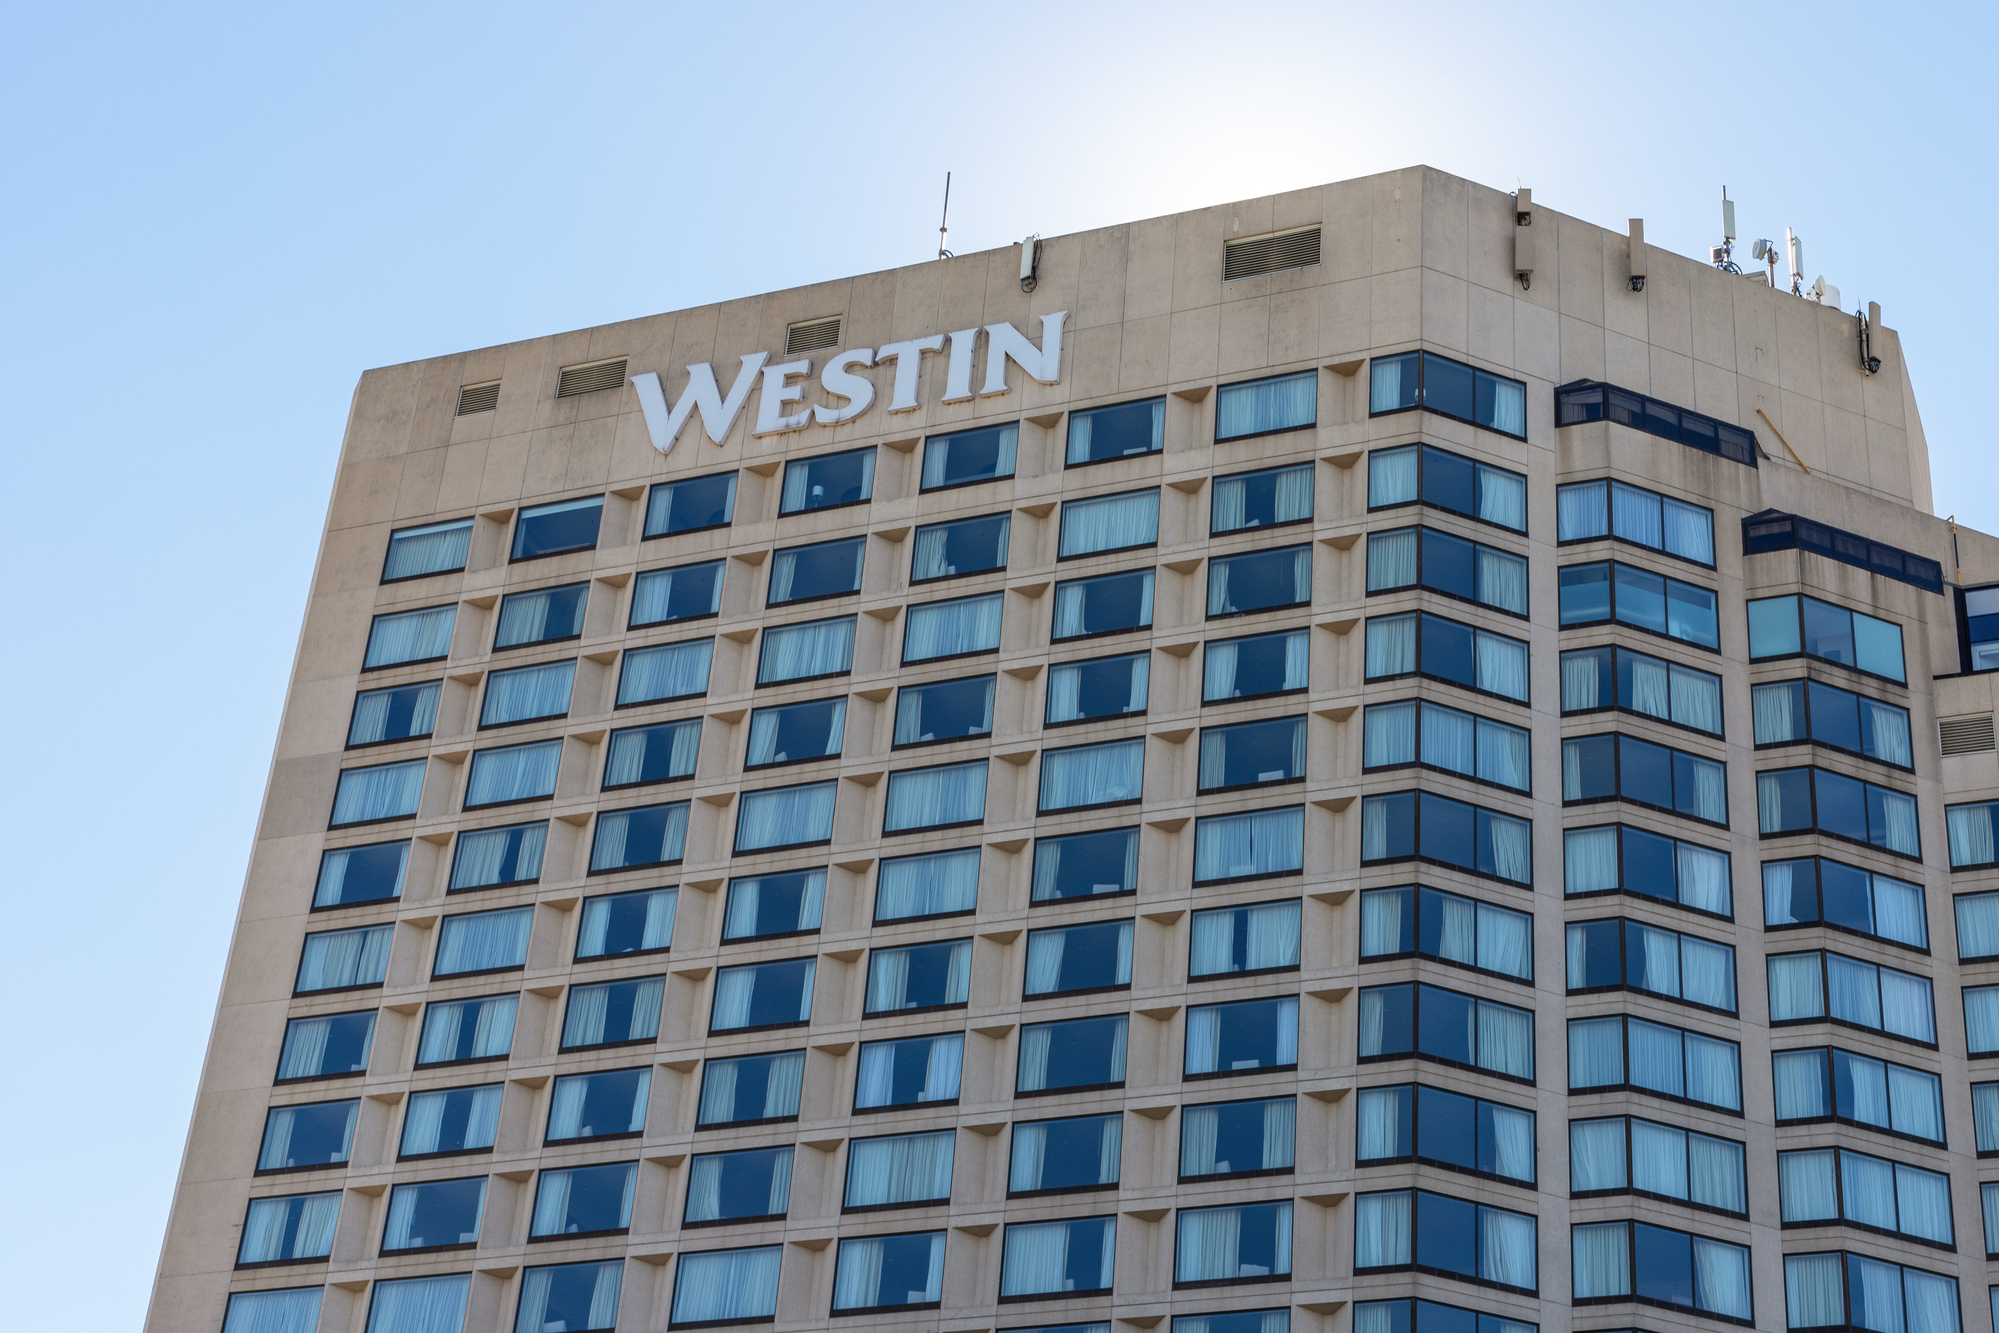 Westin hotel in downtown of Ottawa